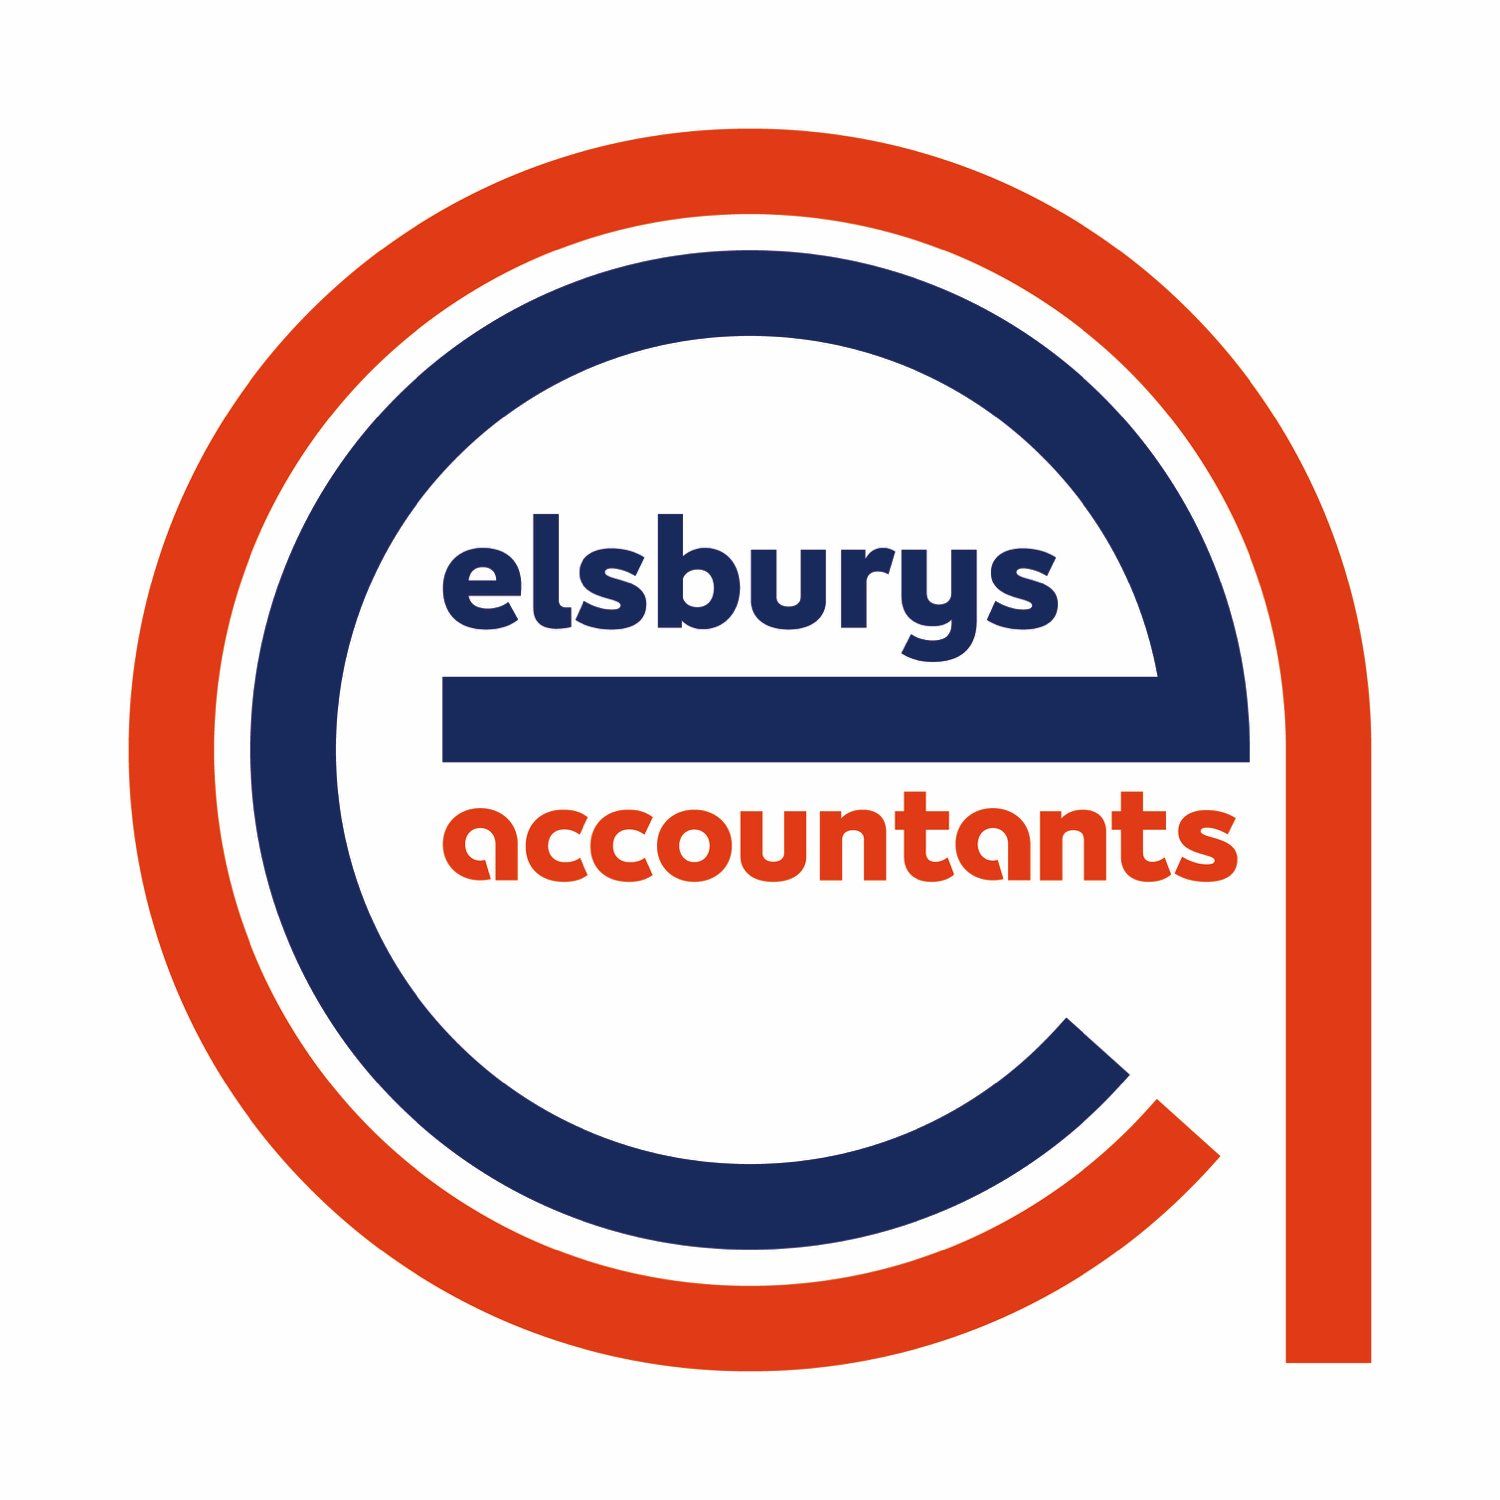 Elsburys Testimonial